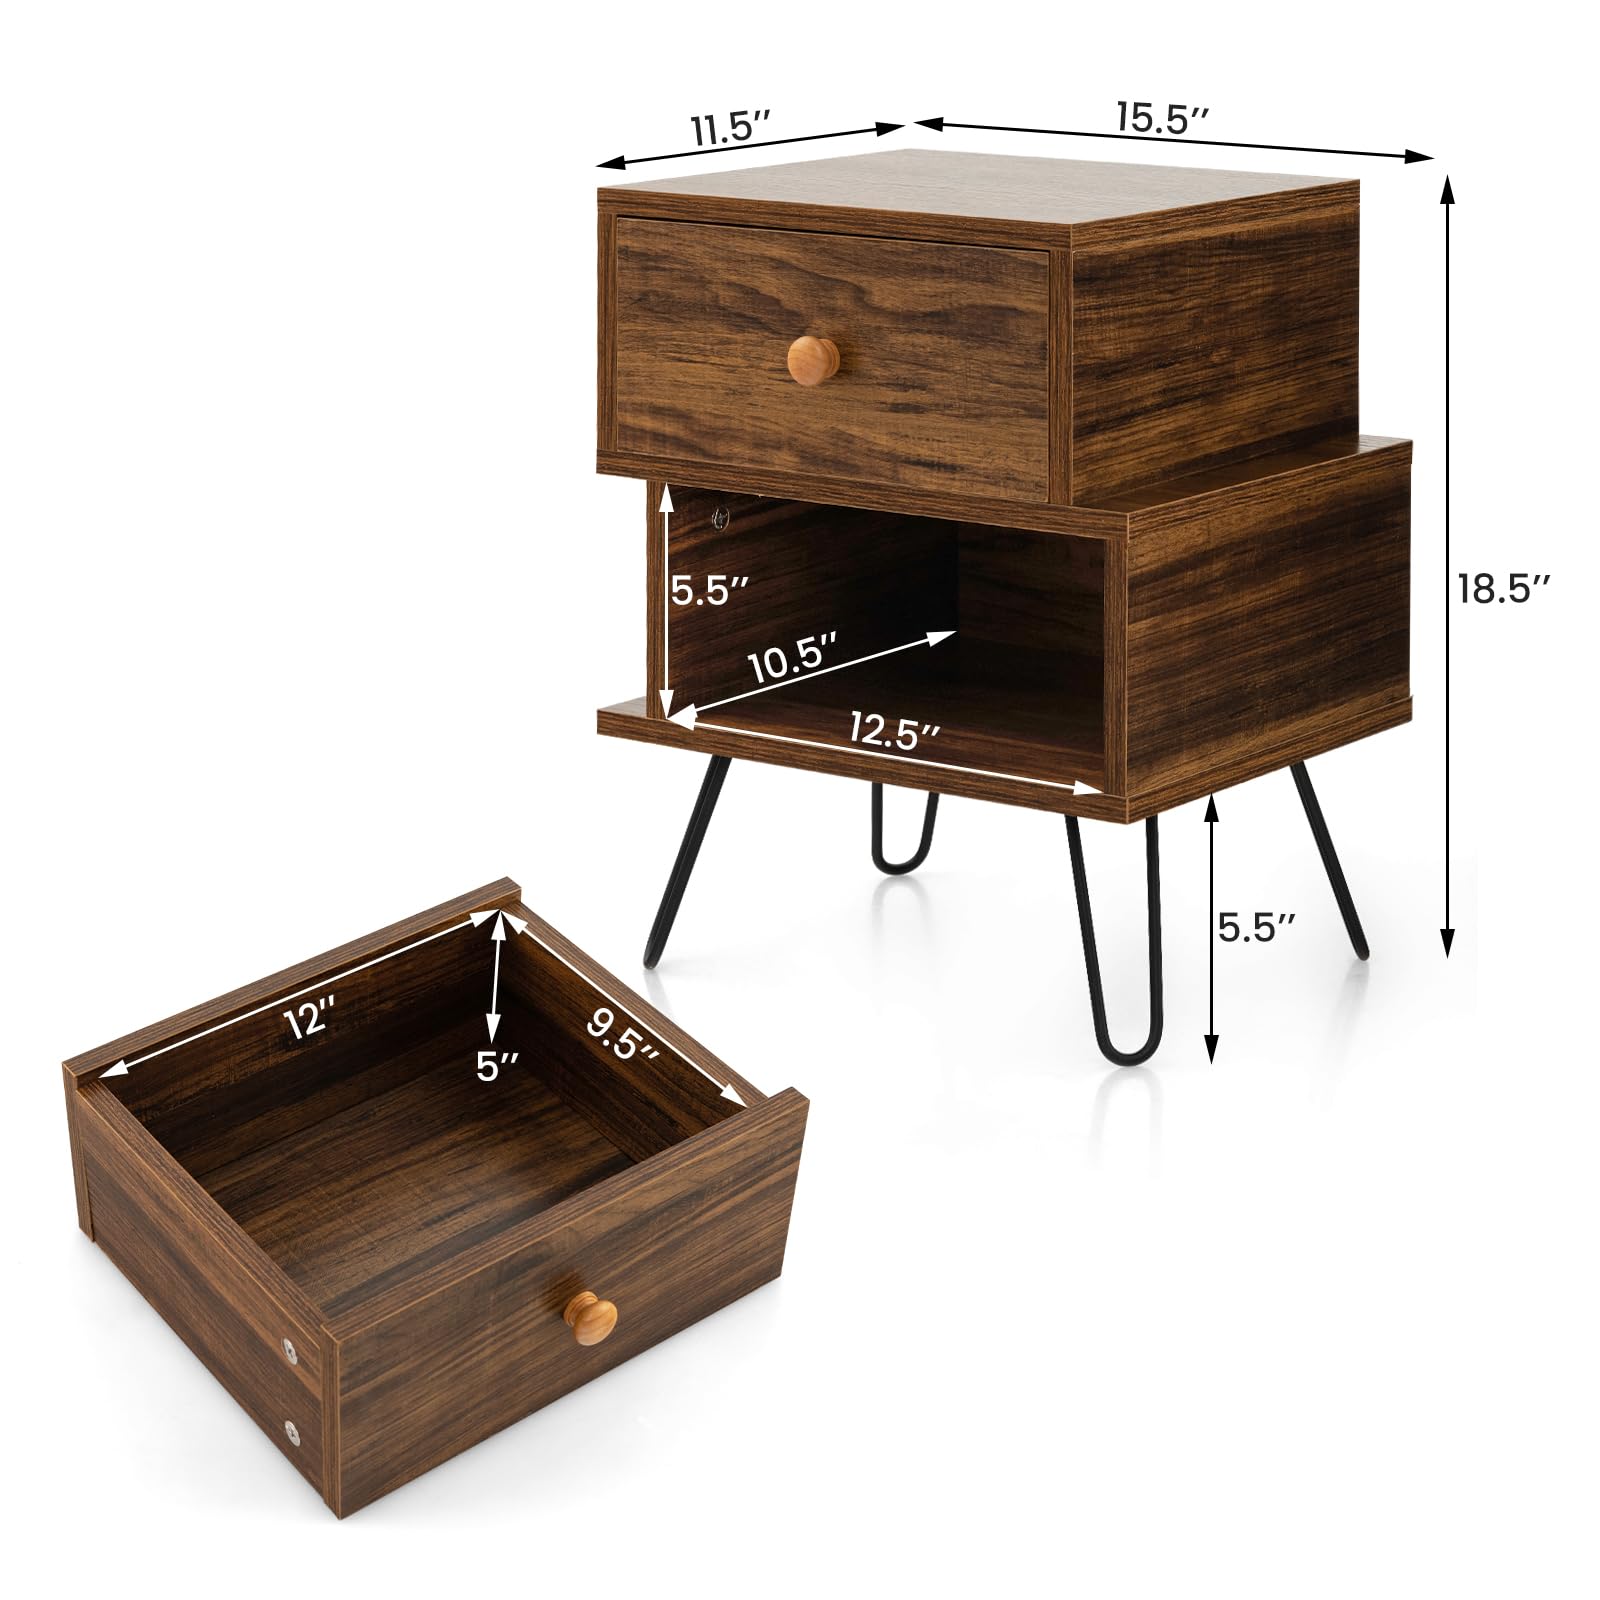 Giantex Nightstands Set of 2, S-Shaped Bedside Tables w/Storage Drawer, Open Shelf